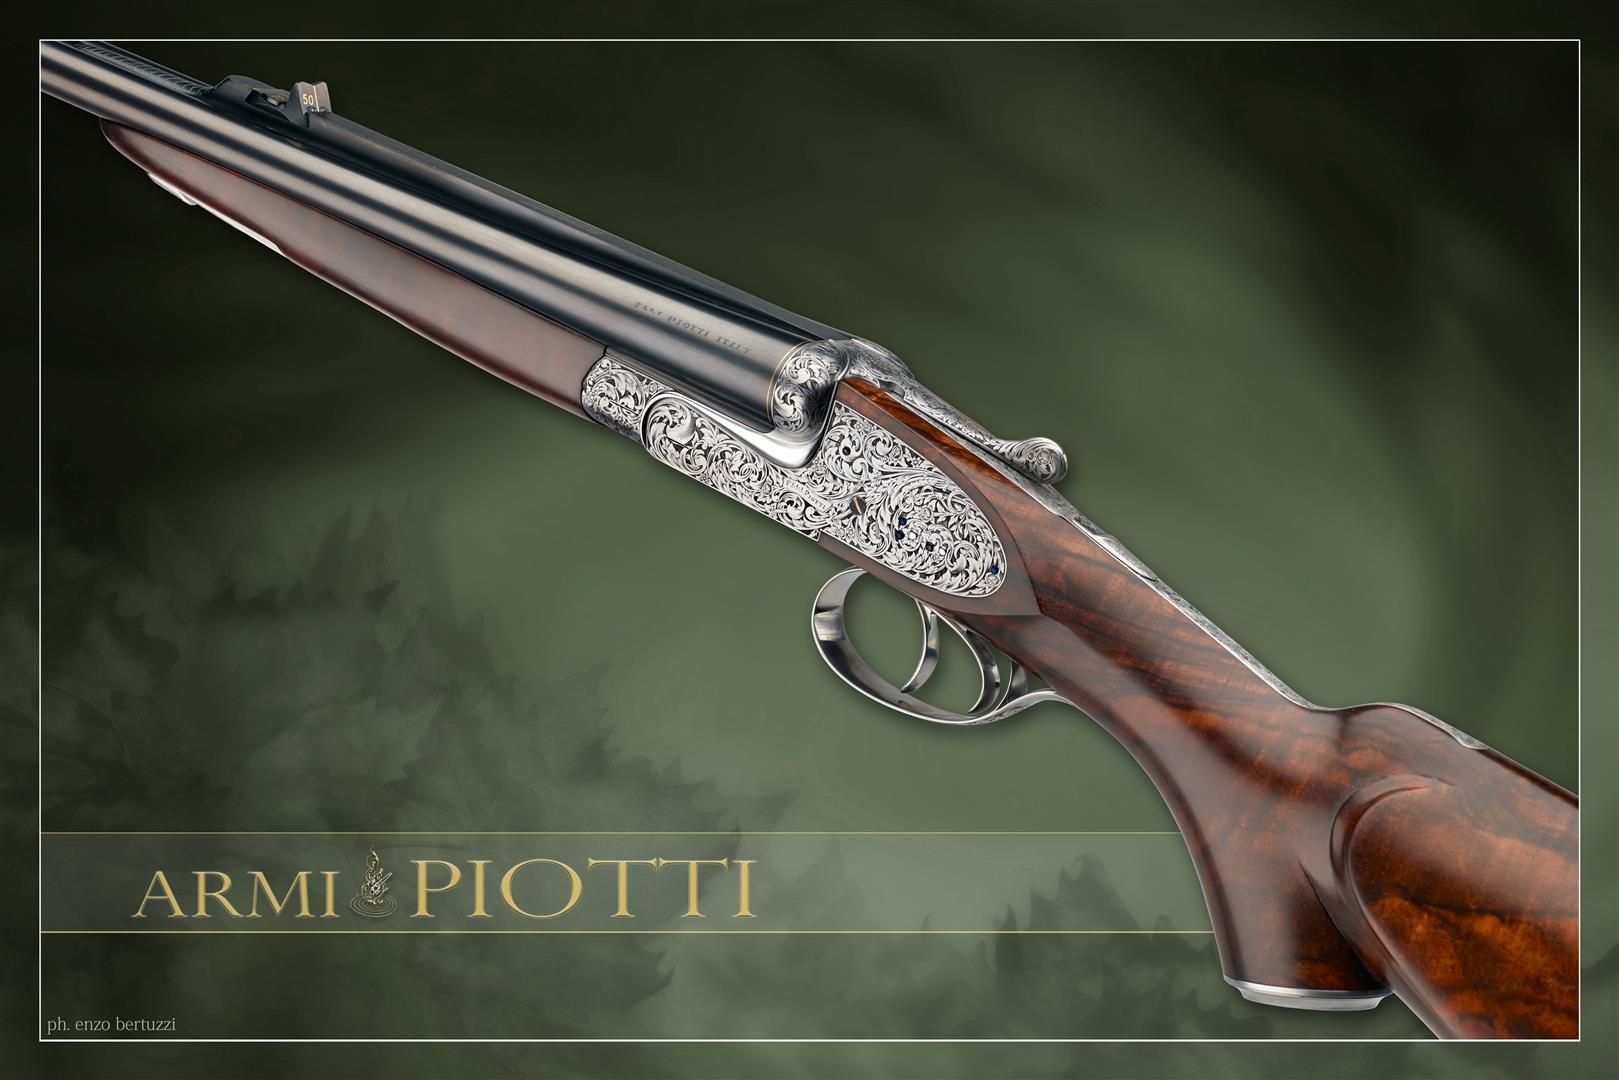 Piotti Express double rifle